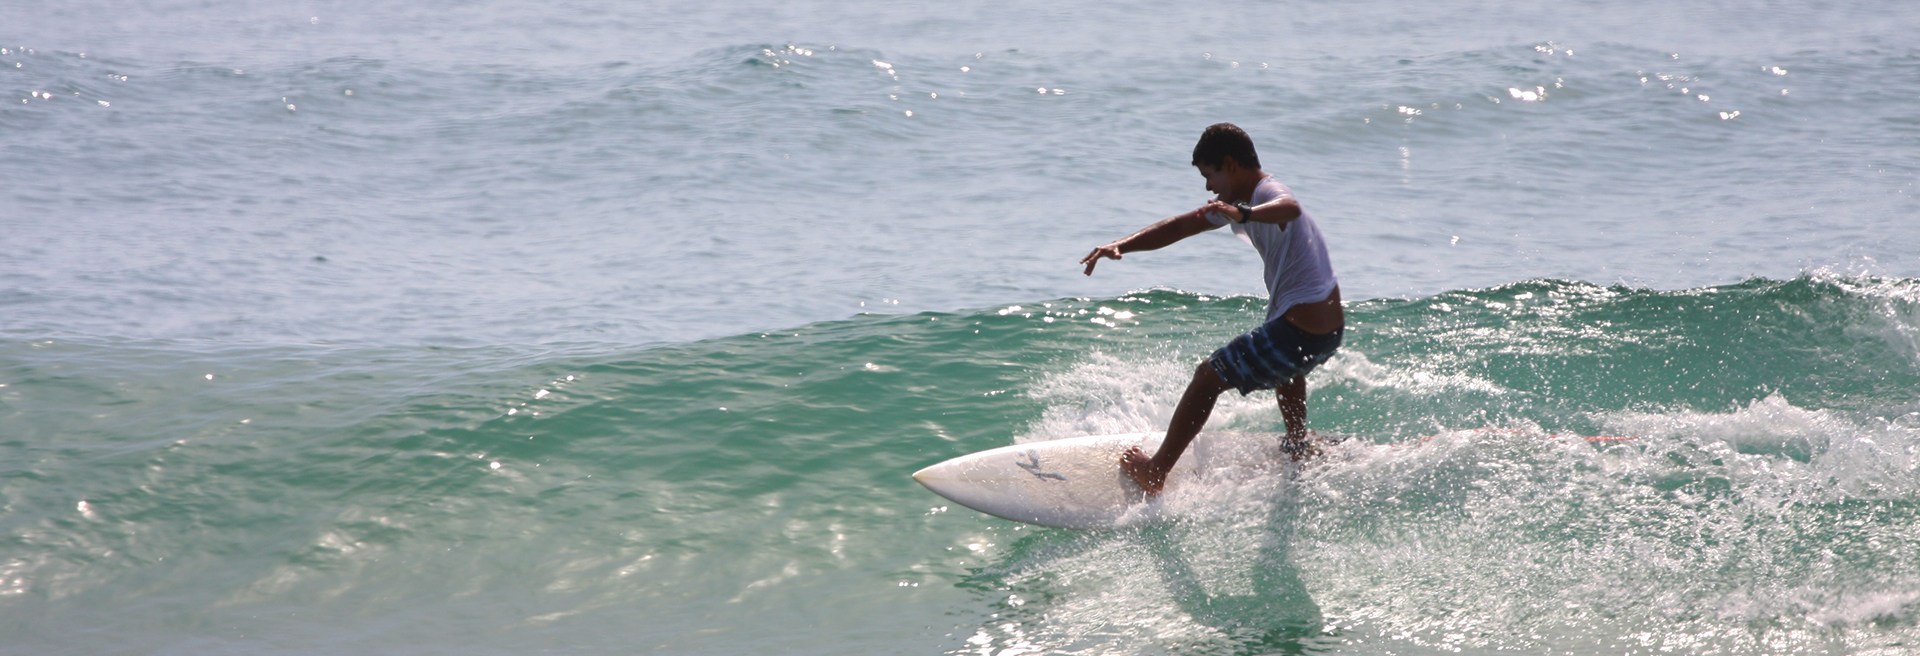 surfer Riding a wave